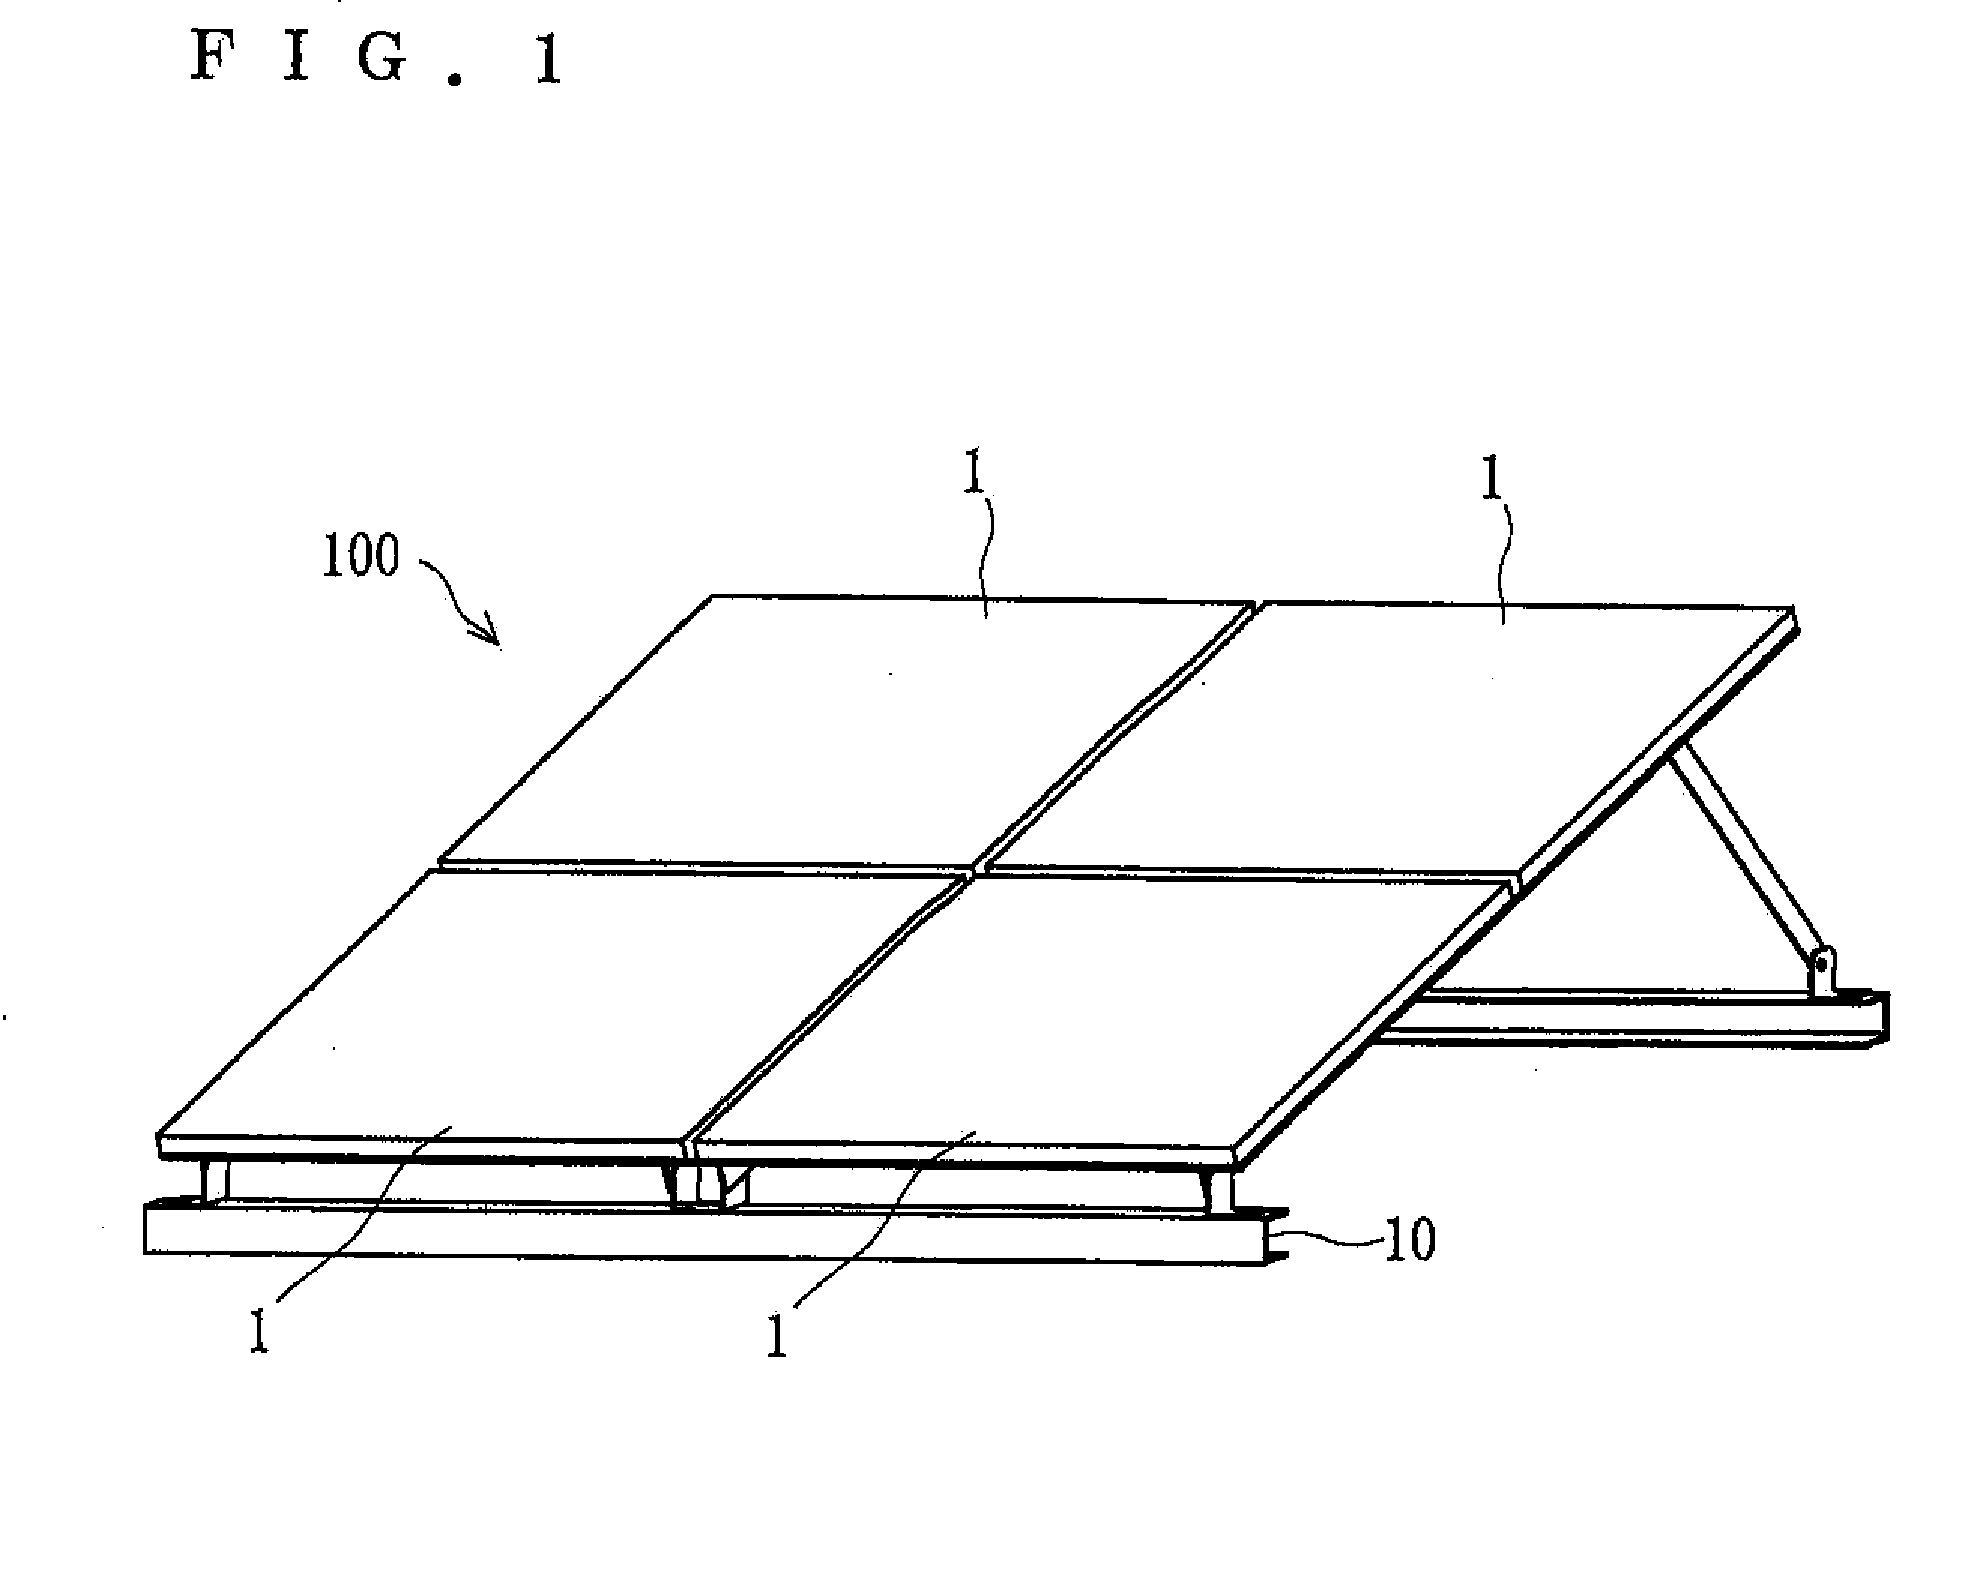 Solar Cell Module